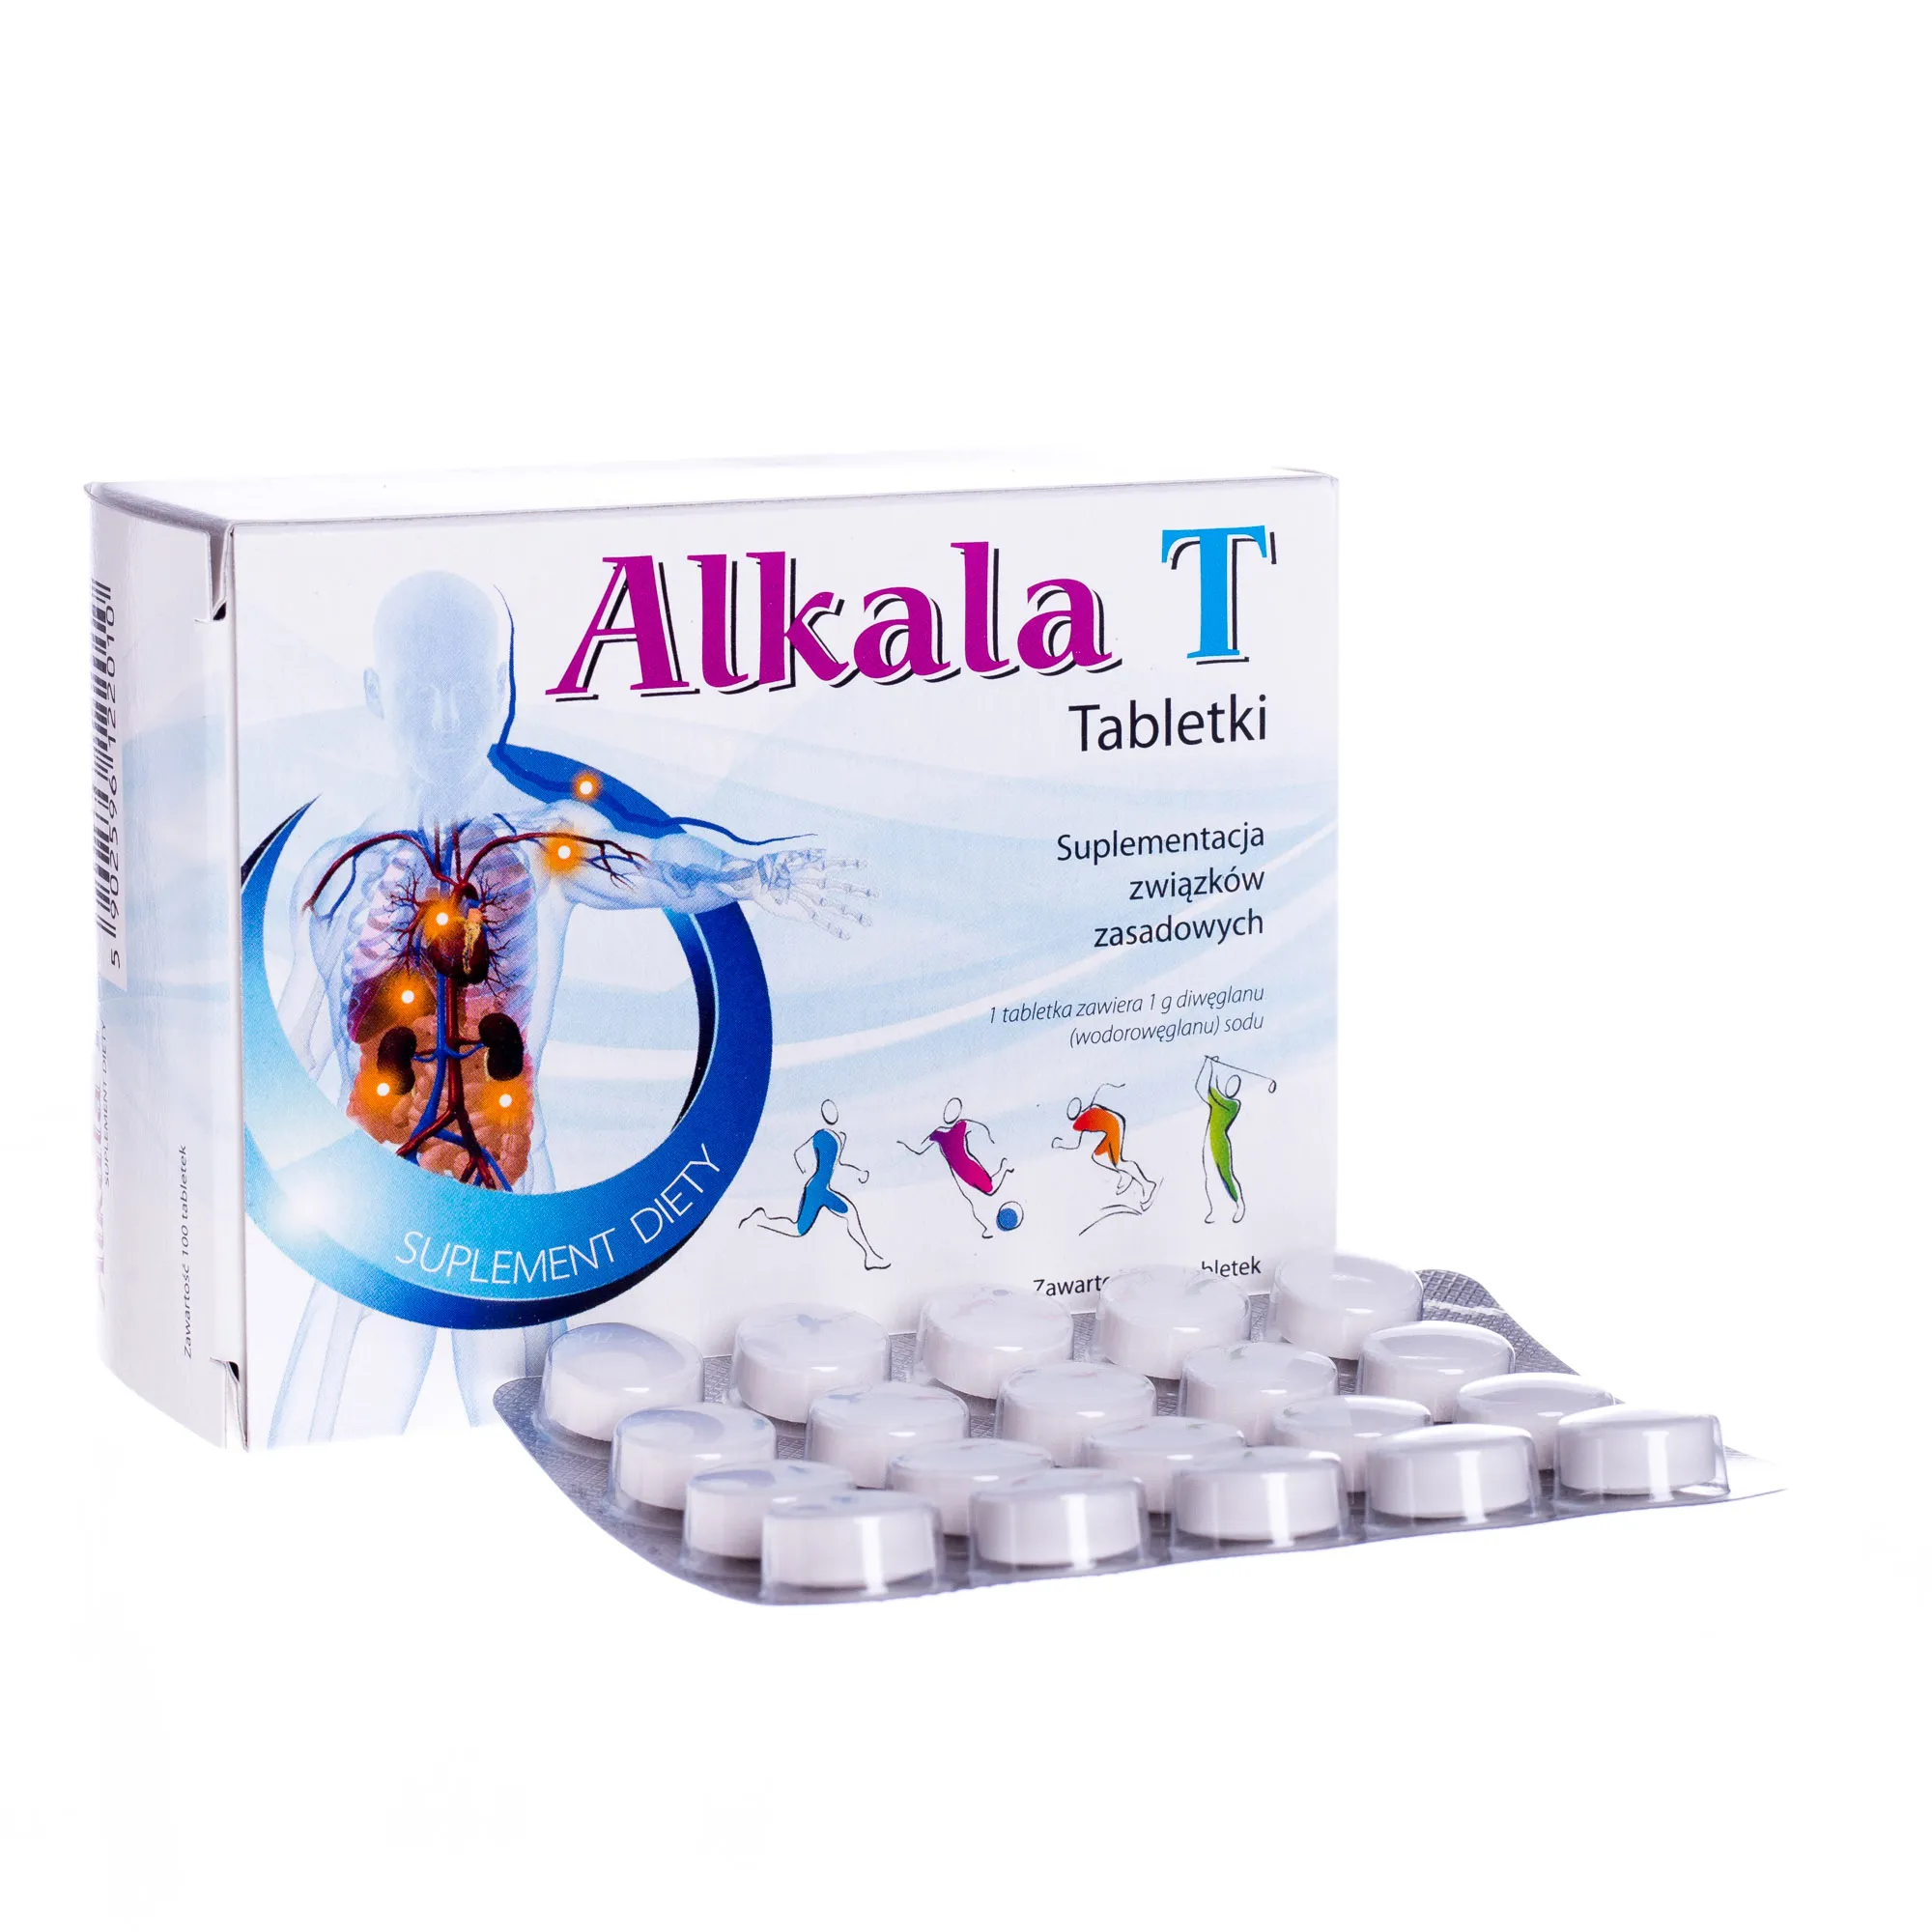 Alkala T Tabletki, suplement diety, 100 tabletek 